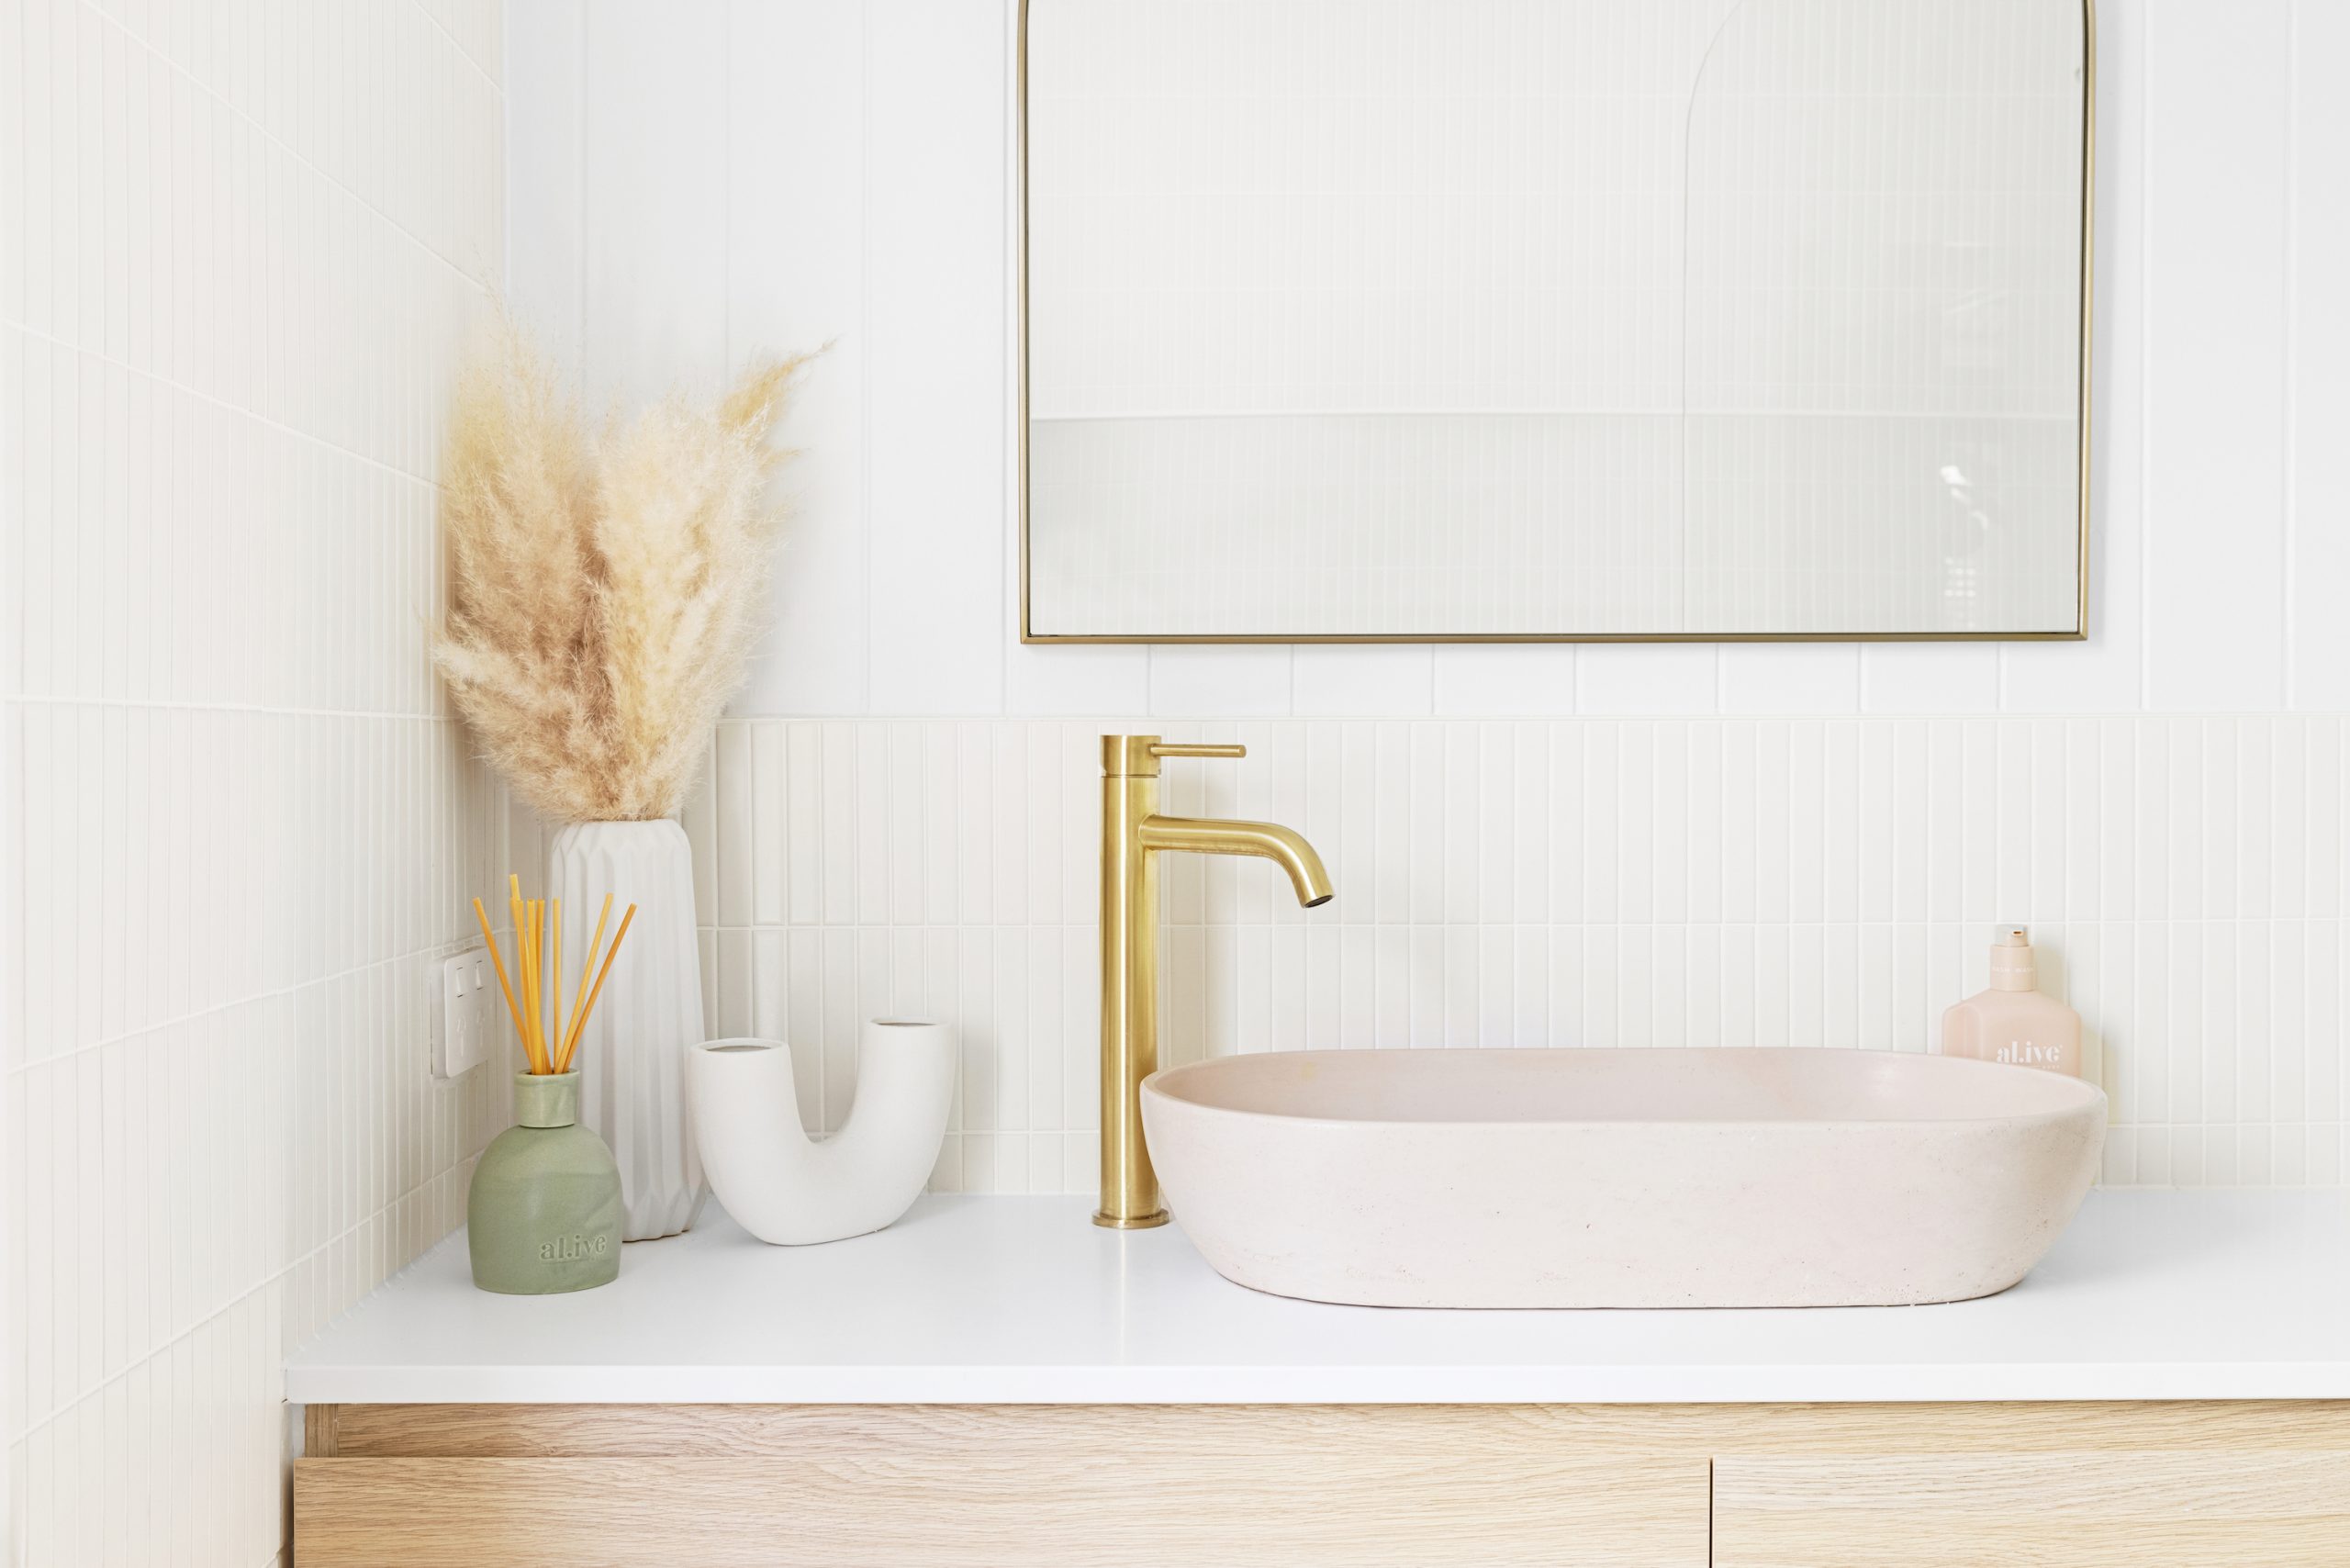 Modern wooden bathroom vanity with gold taps